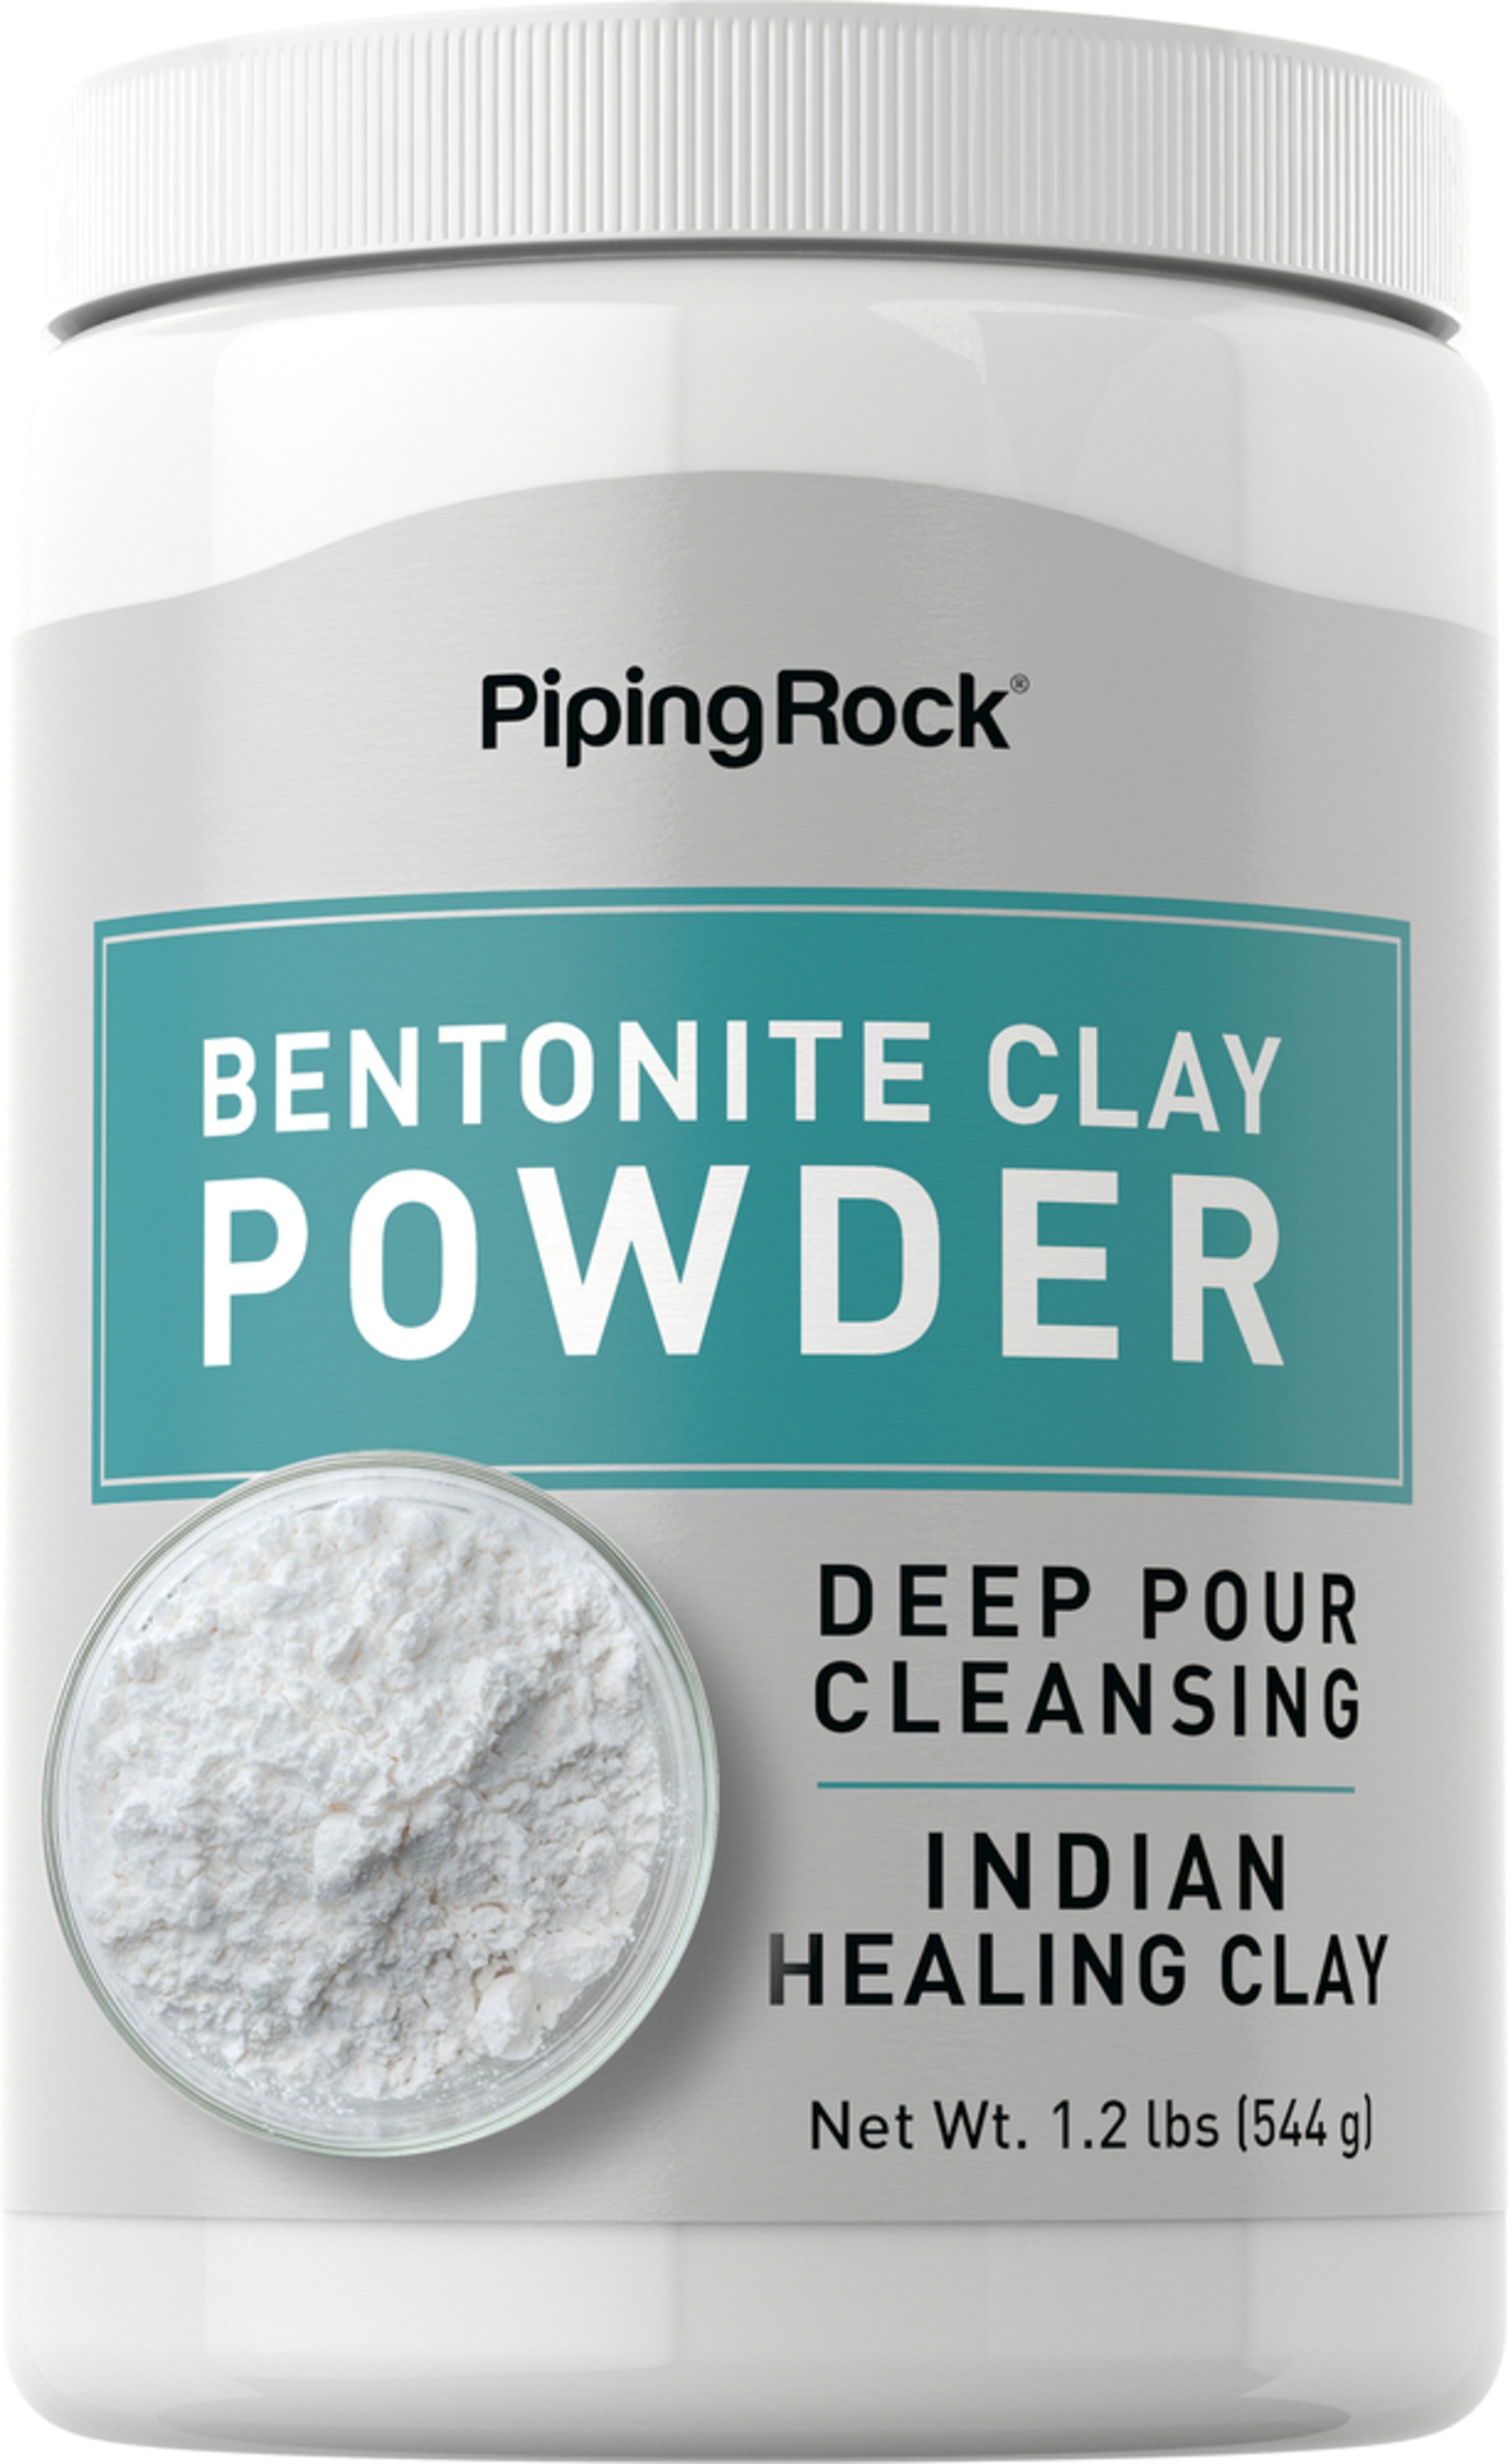 Food Grade Sodium Bentonite Clay - Powder - 1 Pound